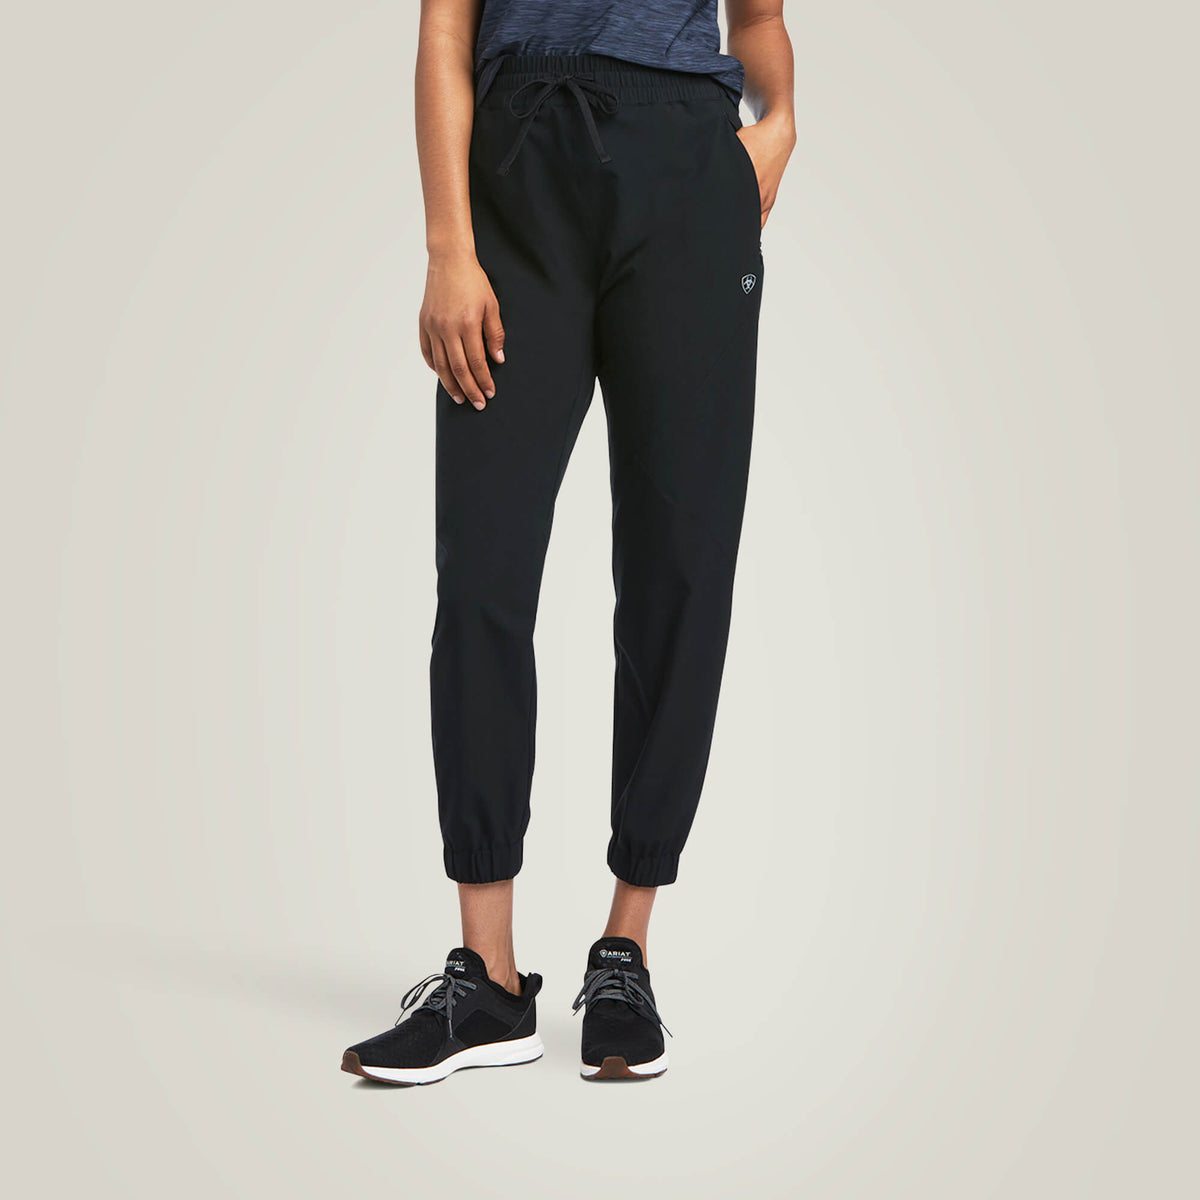 Adidas Originals Womens Woven Pants - Black